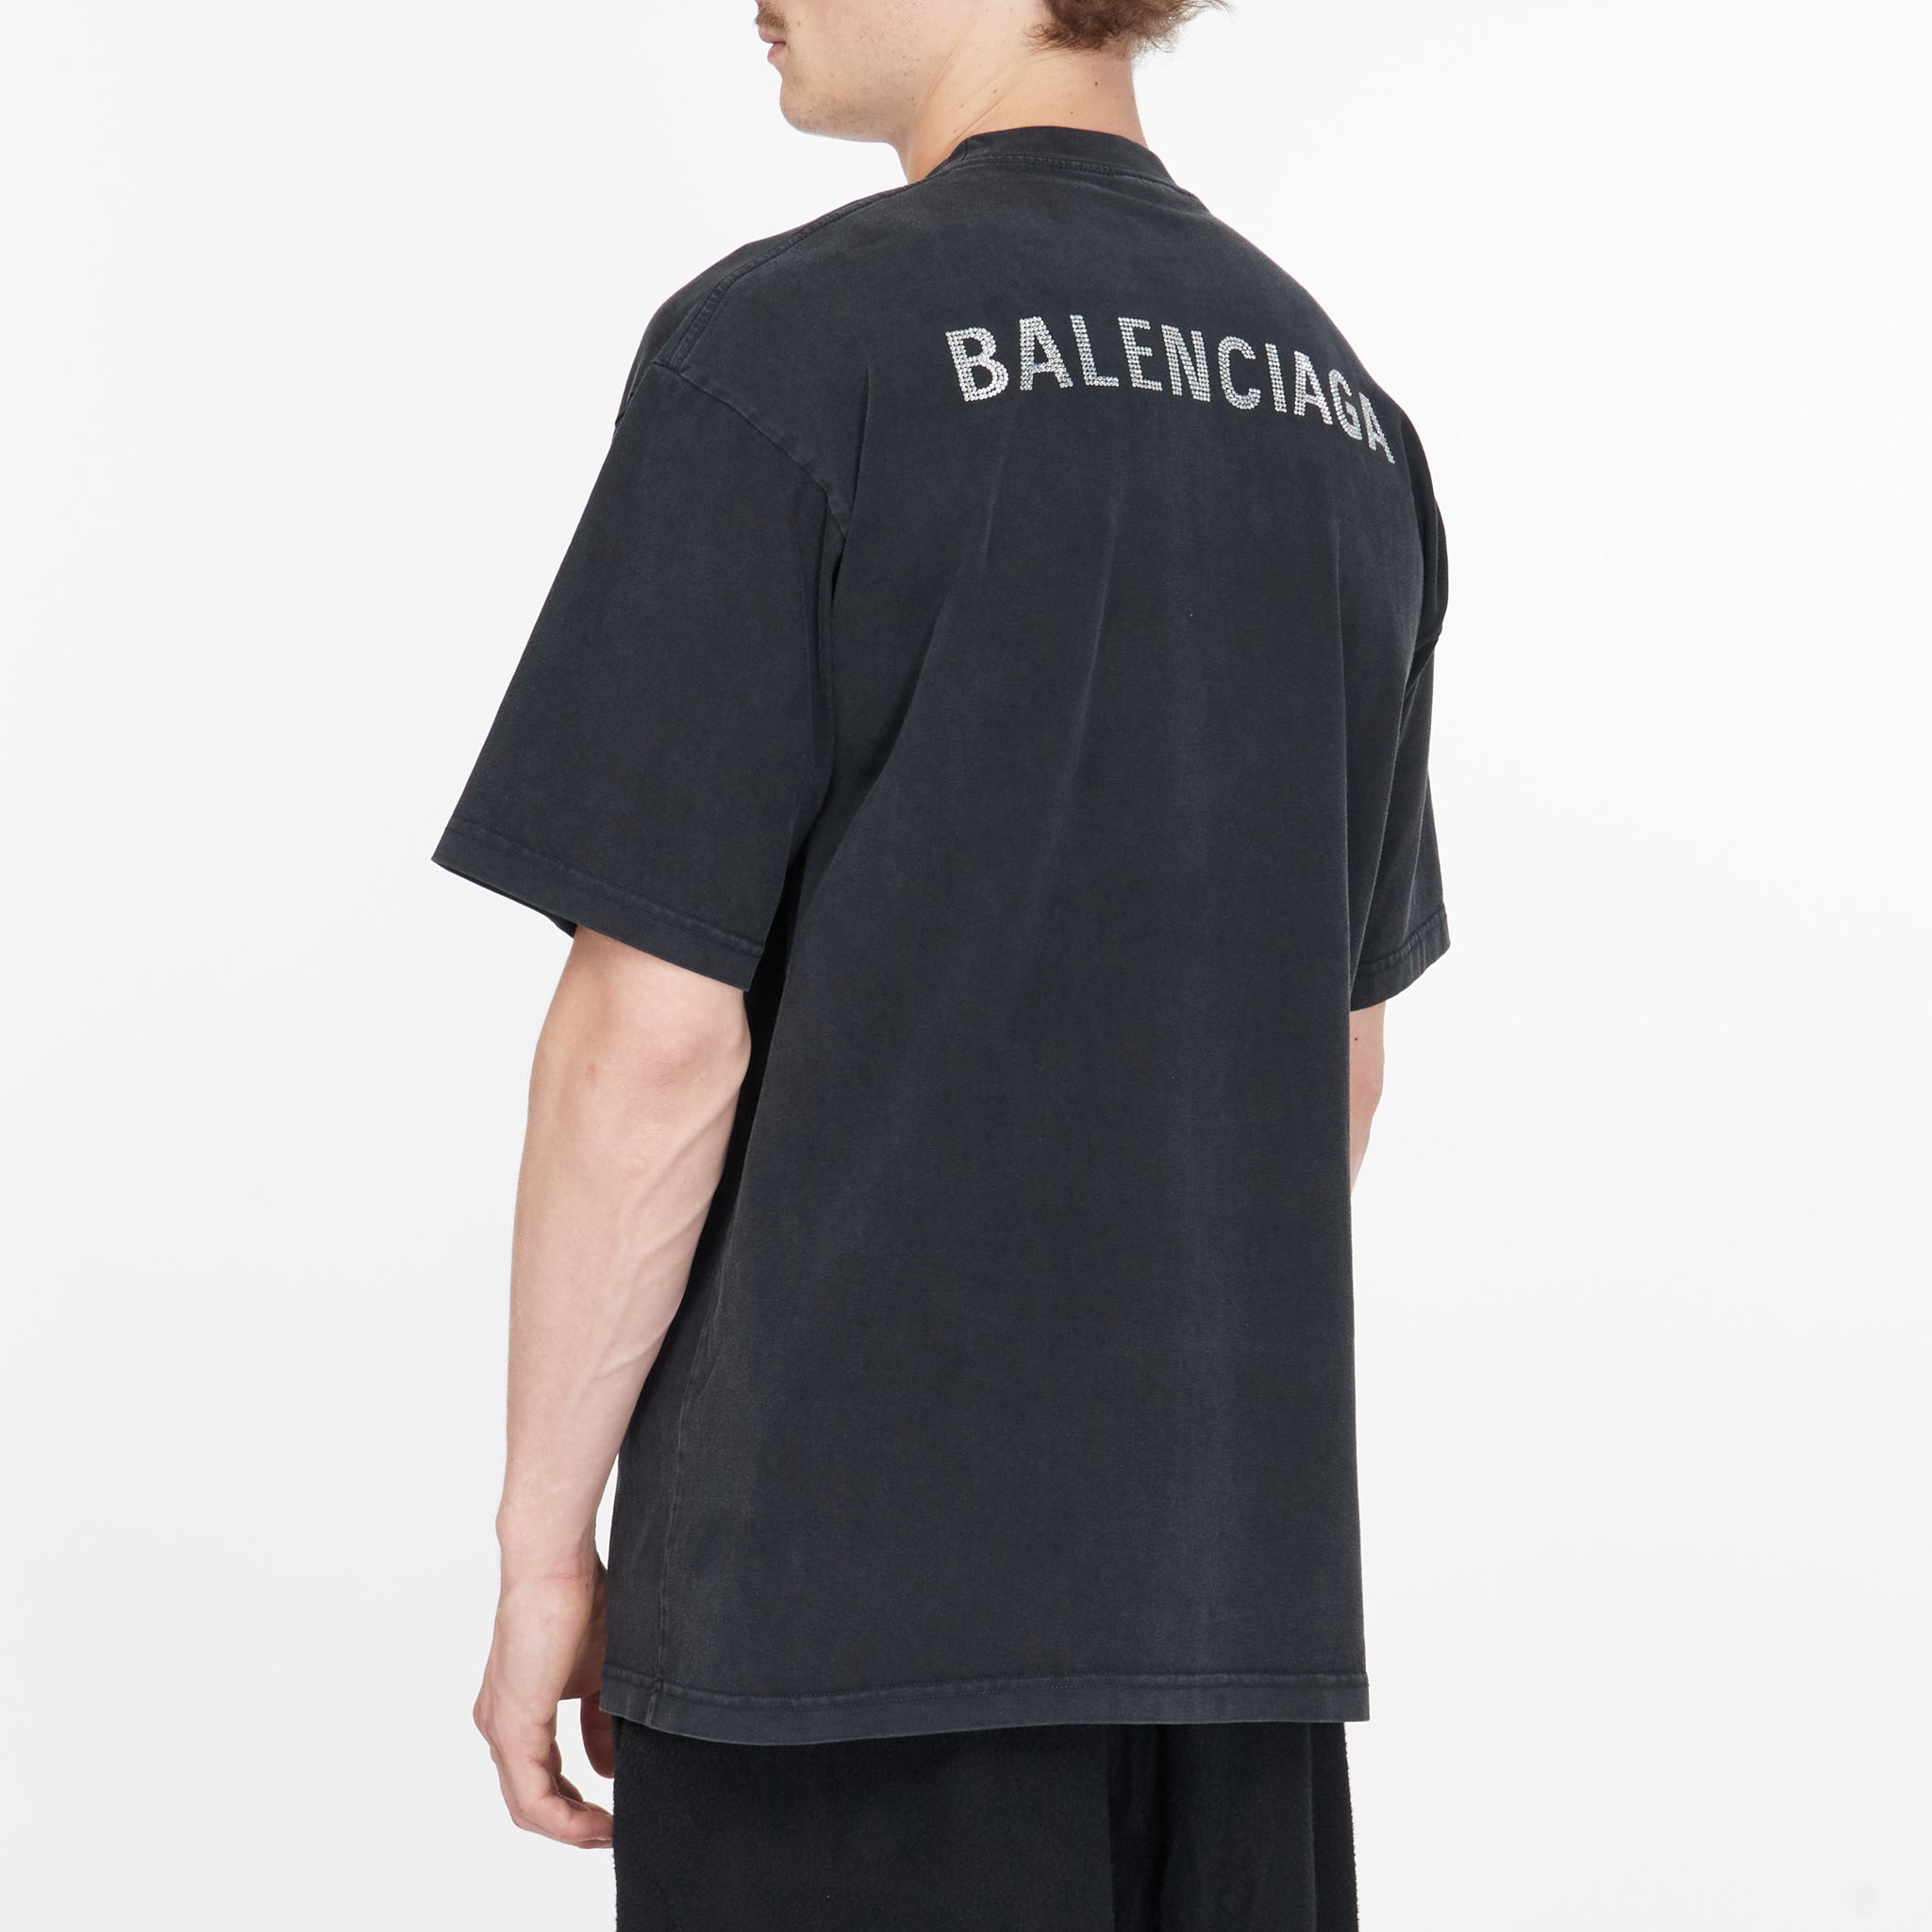 Tee shirt Balenciaga Strass Vintage